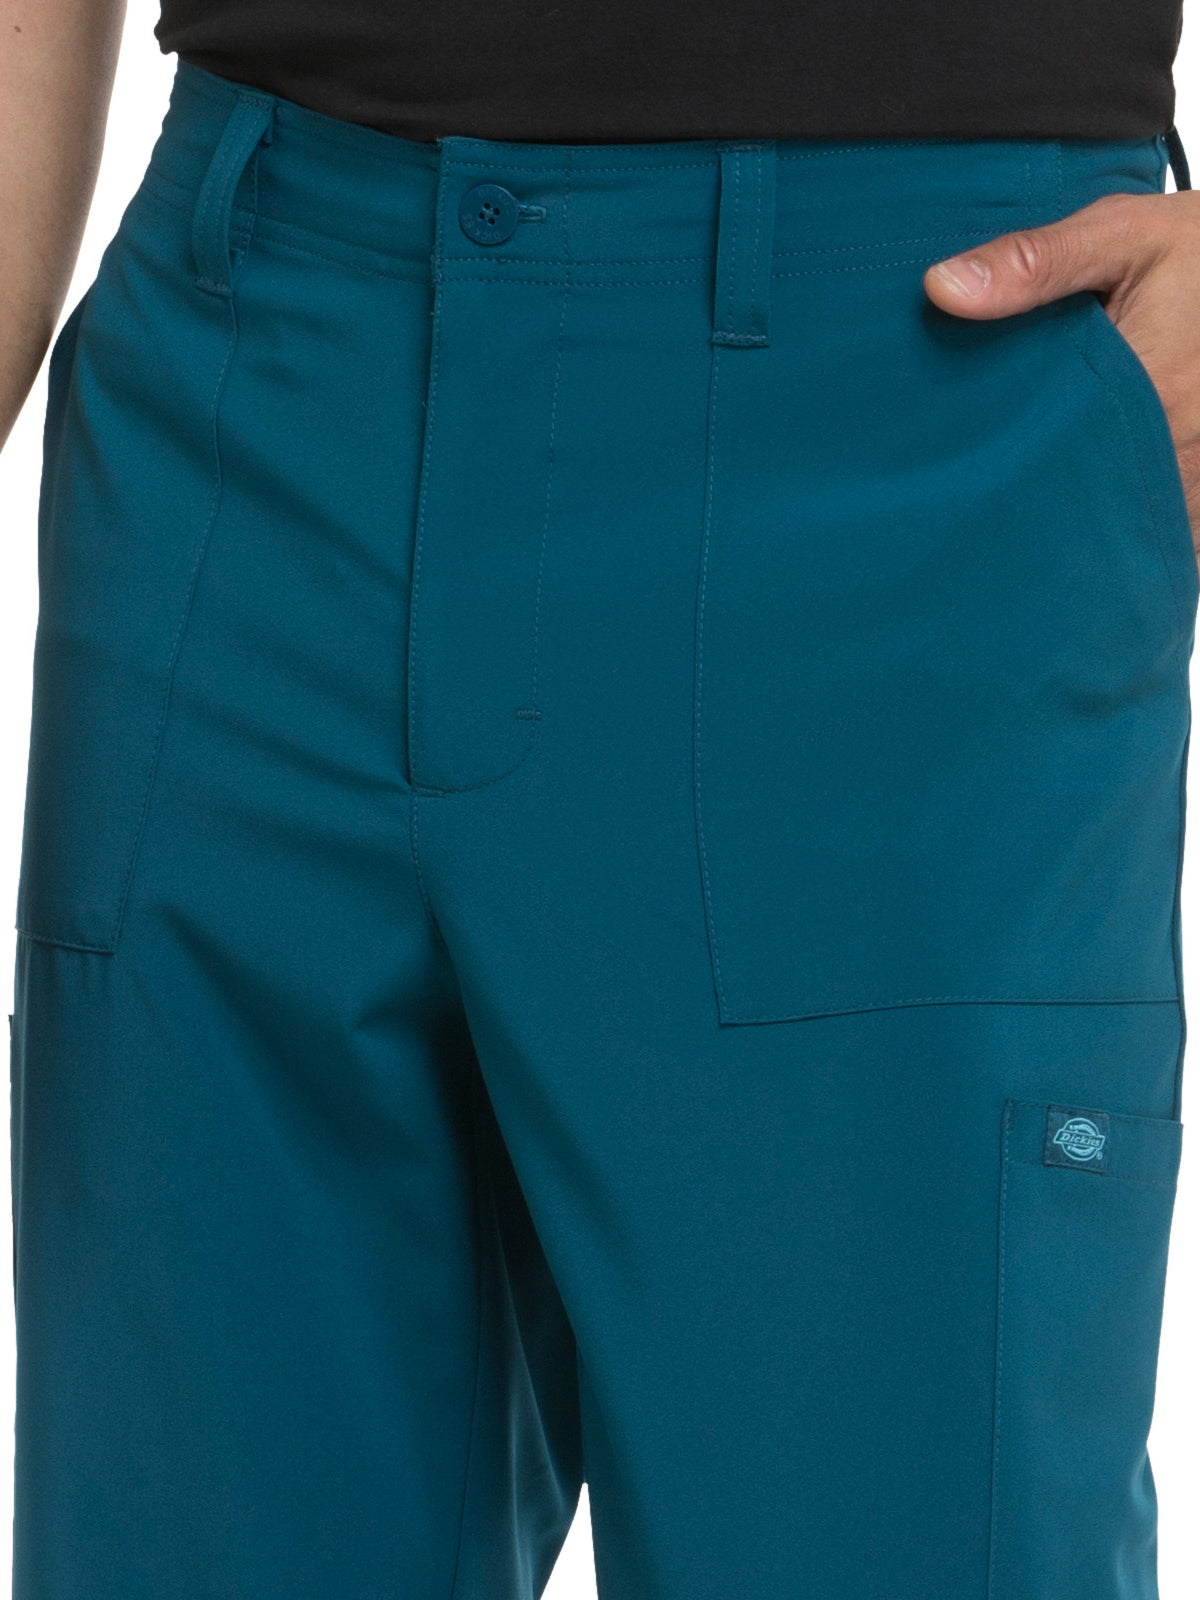 Men's Natural Rise Drawstring Pant - DK015 - Caribbean Blue